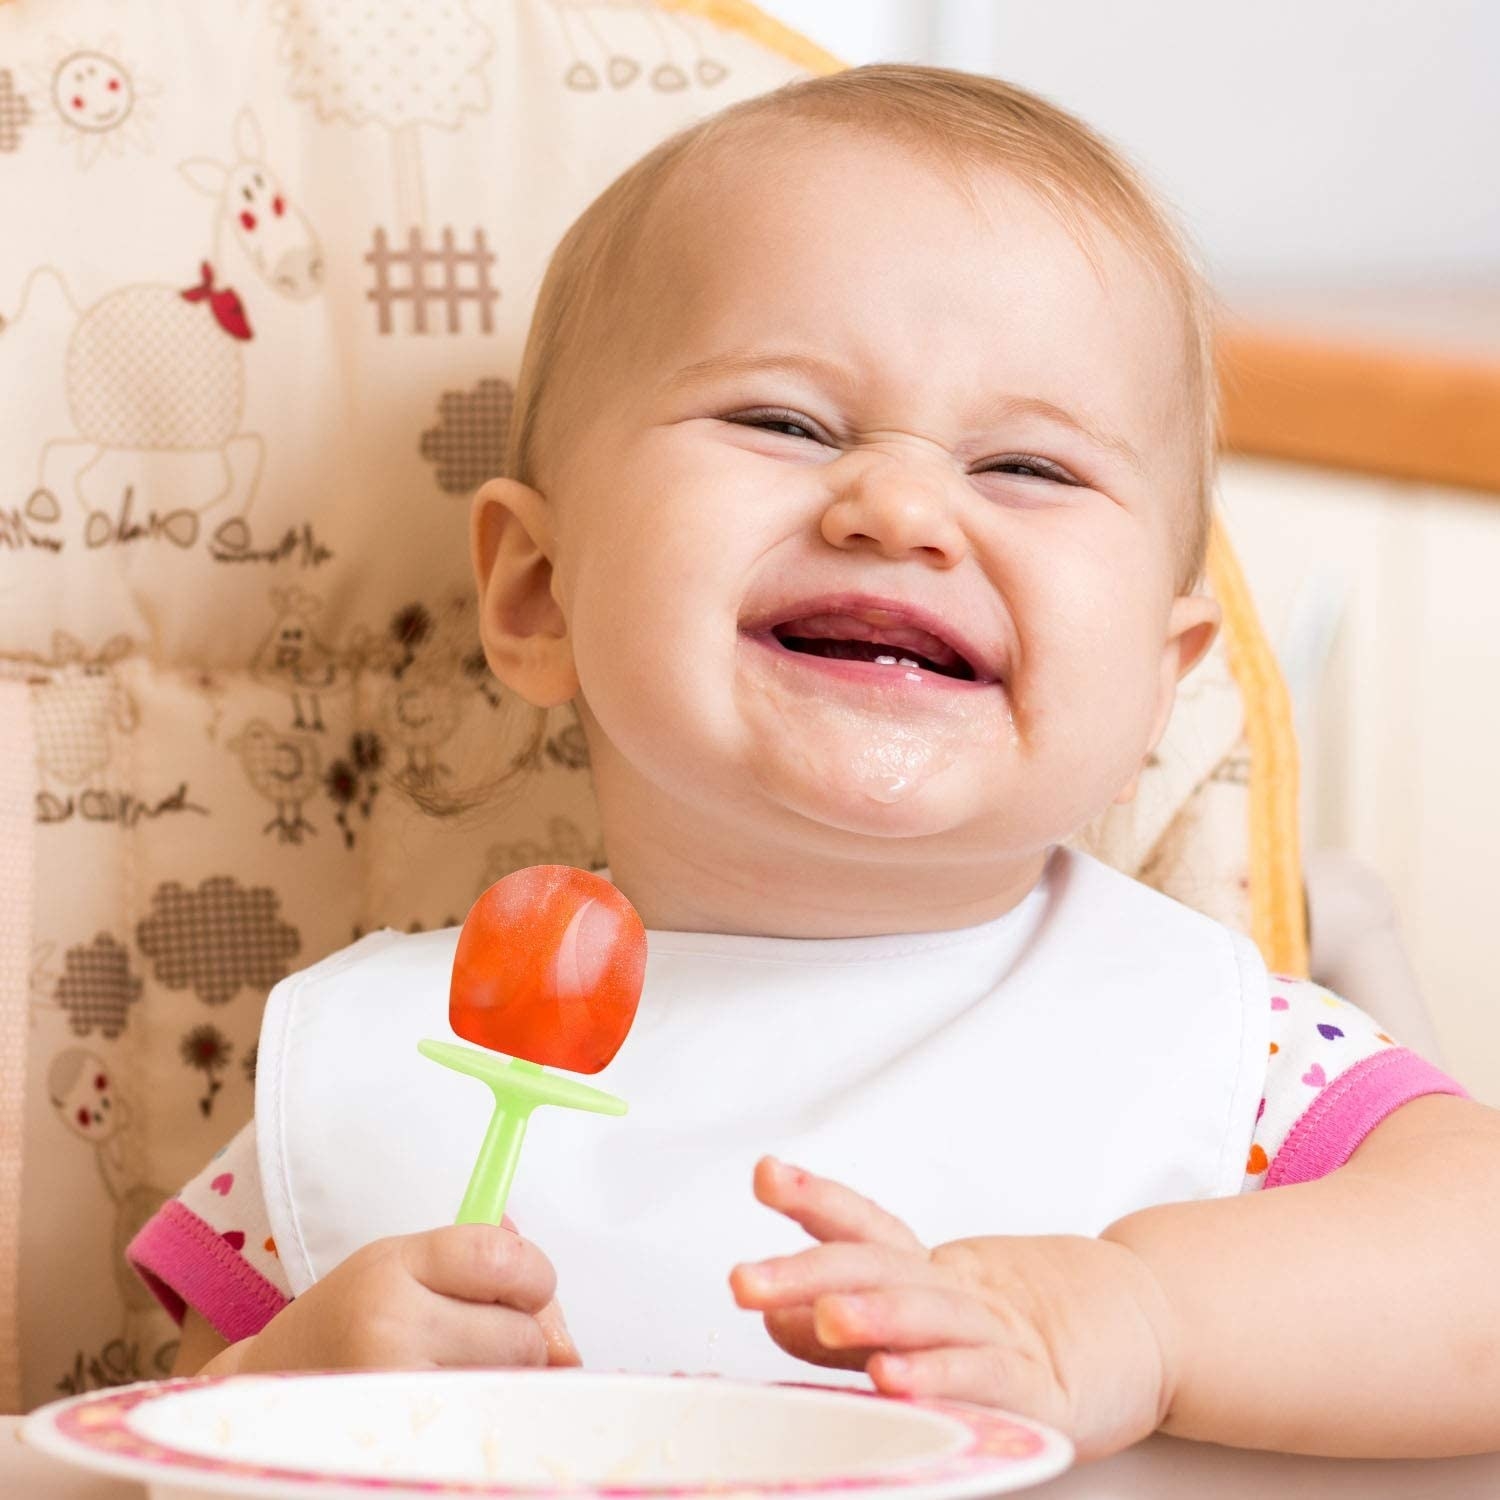 A baby eats a homemade ice pop